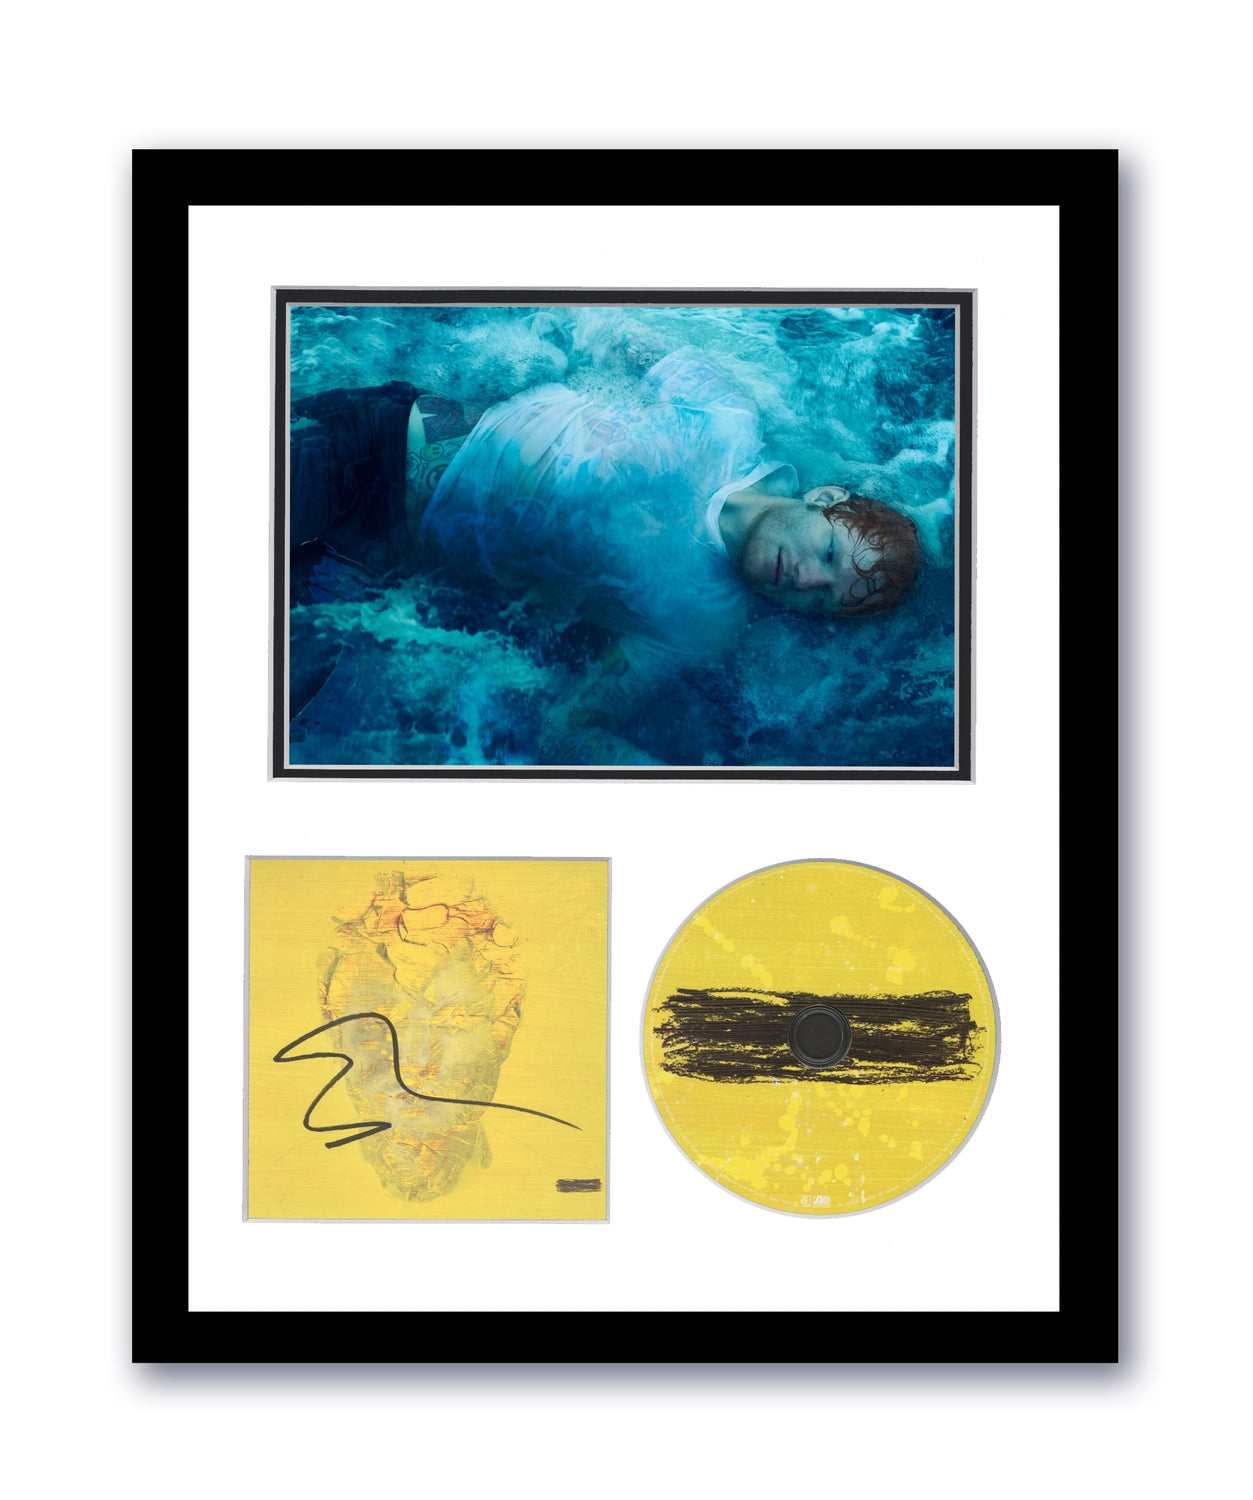 Ed Sheeran Signed 11x14 Framed Photo CD Subtract Autographed ACOA #3